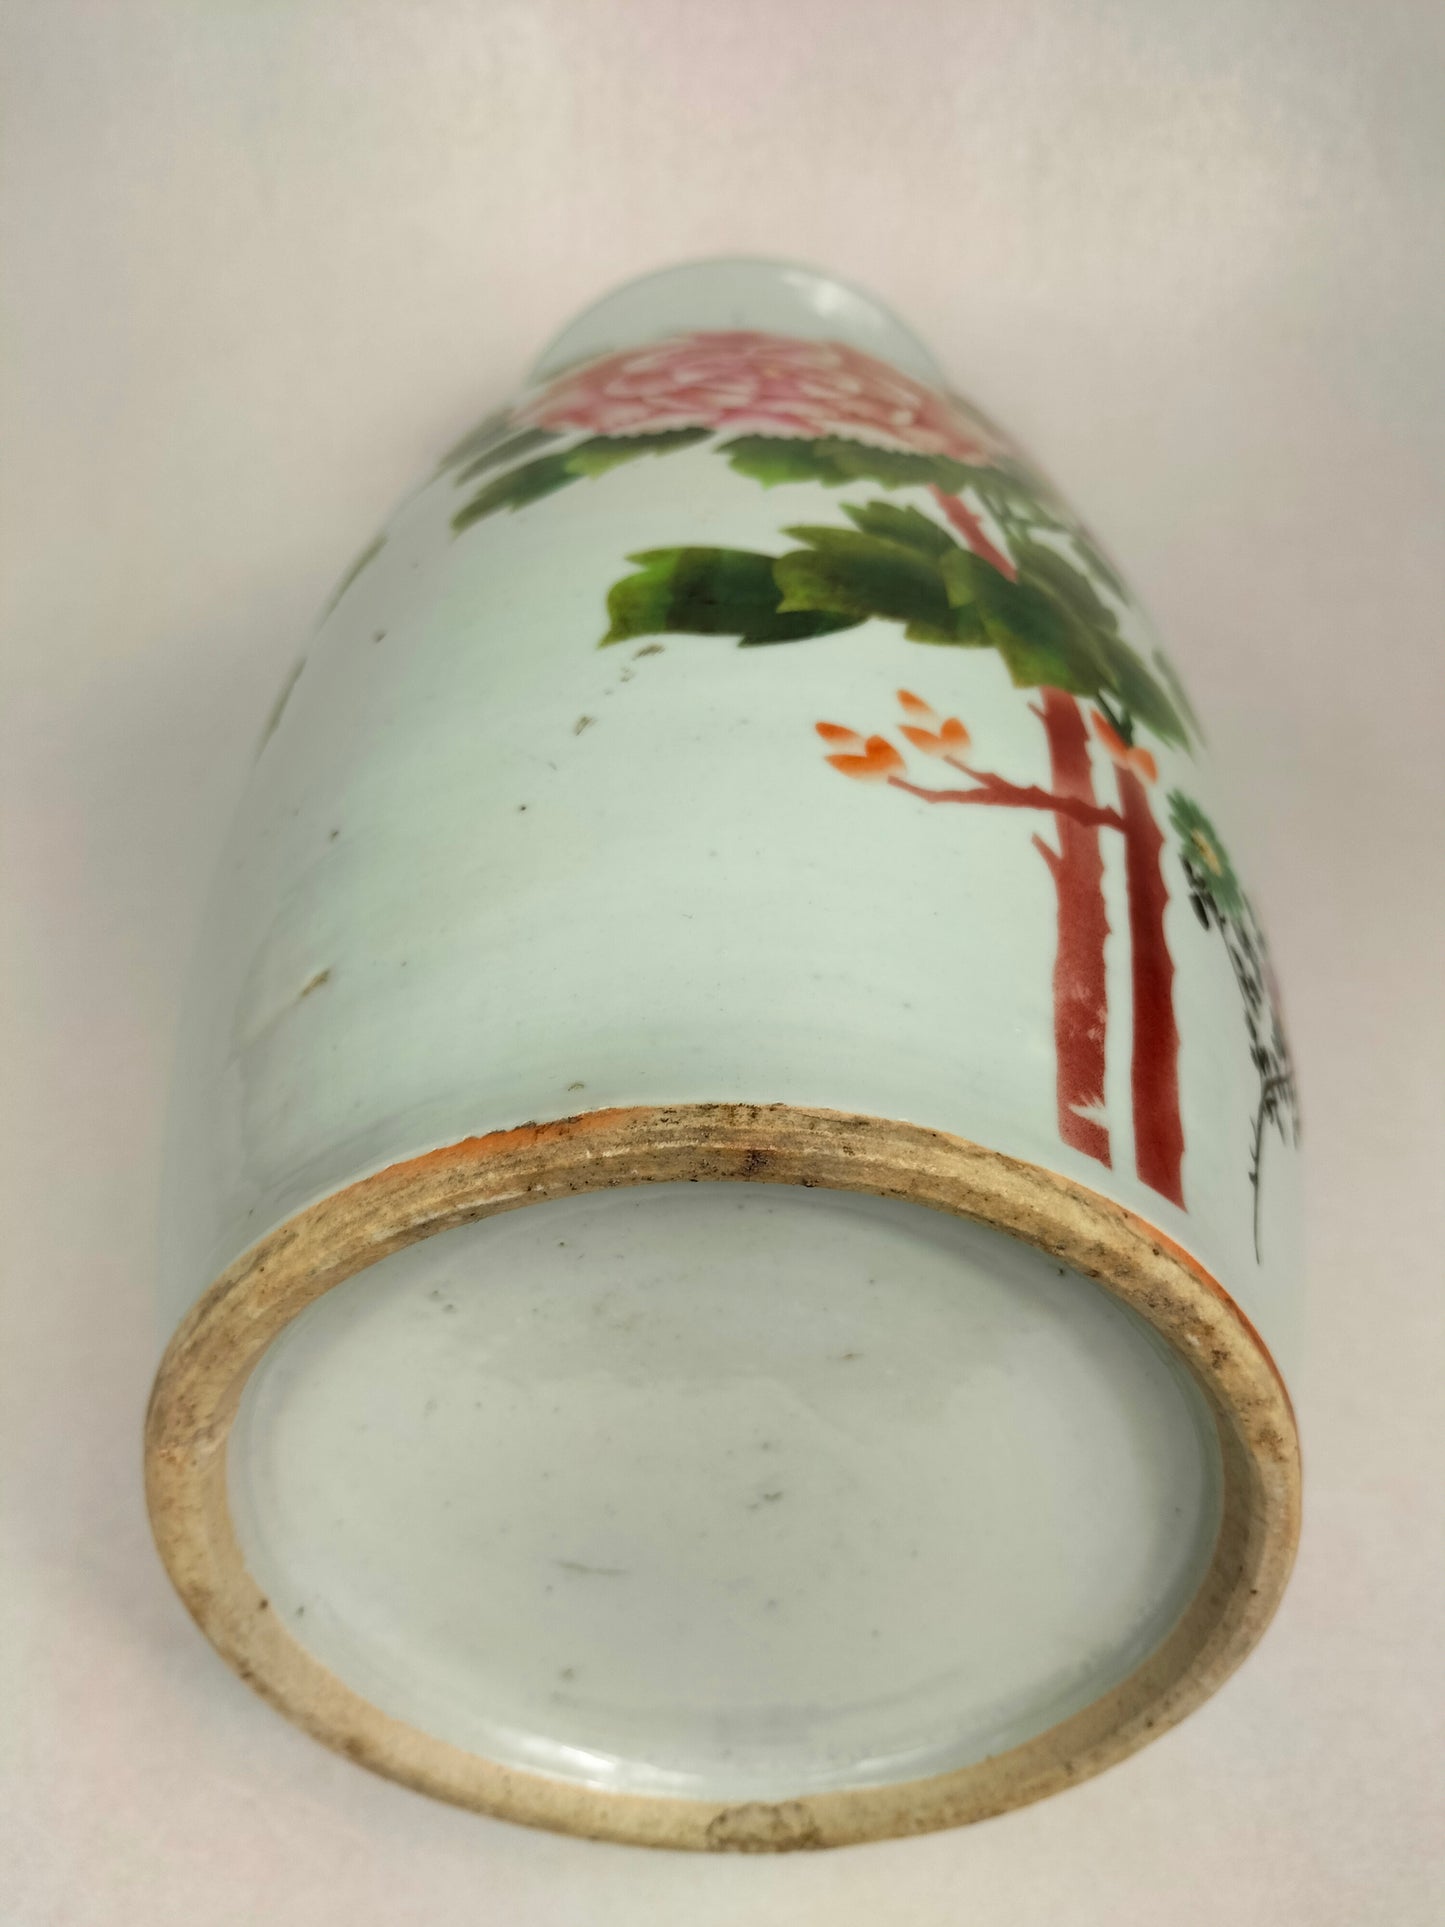 Antique Chinese vase decorated with peonies // Republic Period (1912-1949)